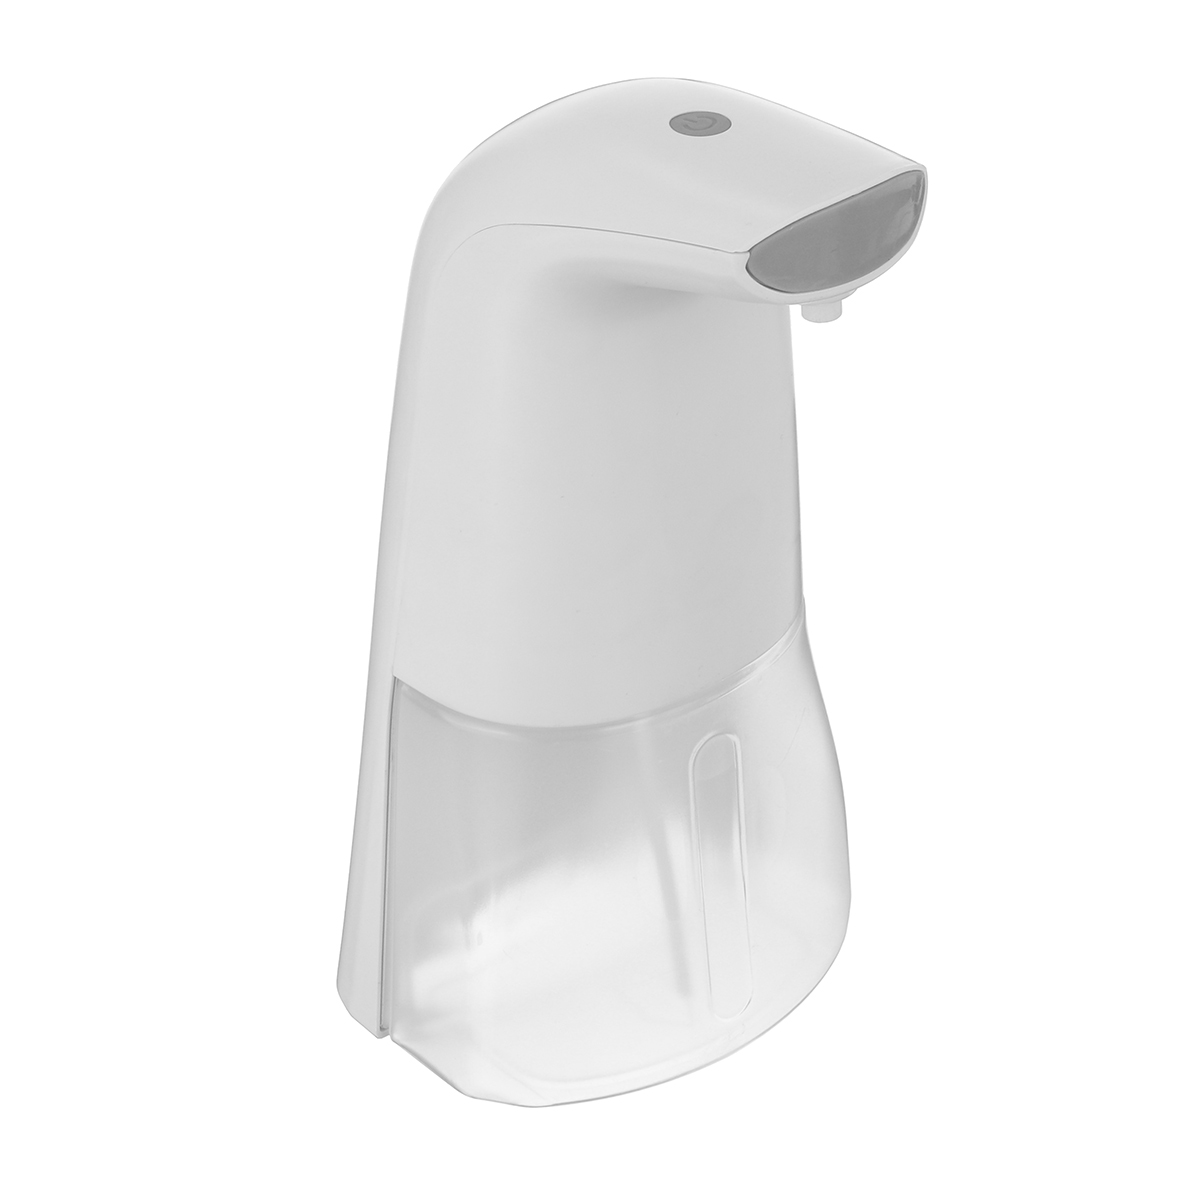 250ml-Auto-Foaming-Soap-Dispenser-Touchless-Sensing-Foam-For-Bathroom-Kitchen-1676732